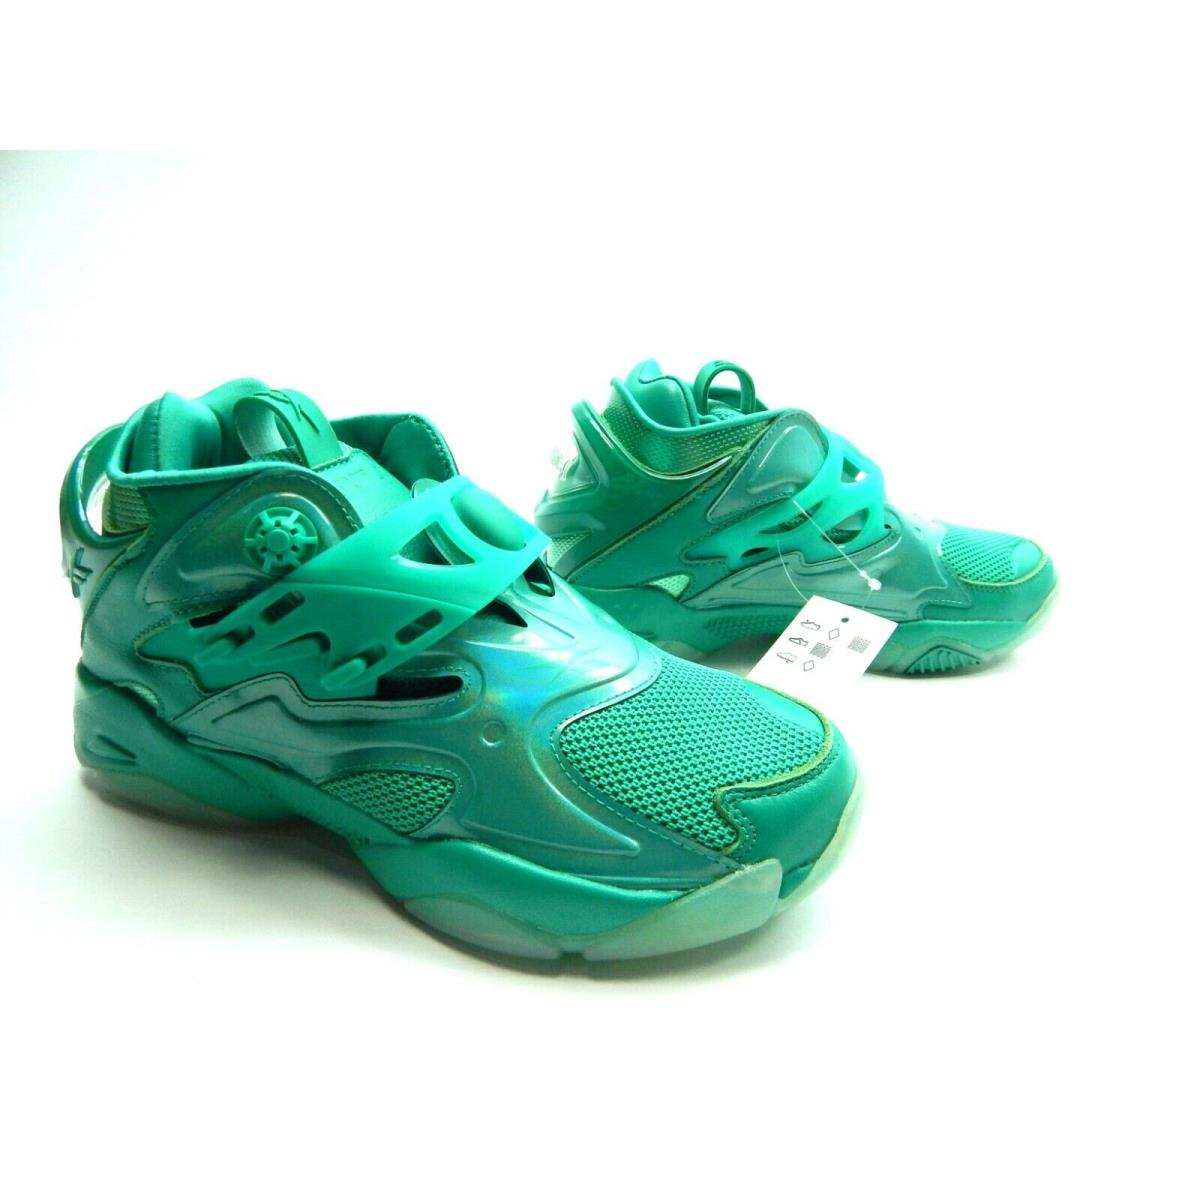 Reebok Pump Court Juun.j H69061 Emerald Men Shoes Size 5